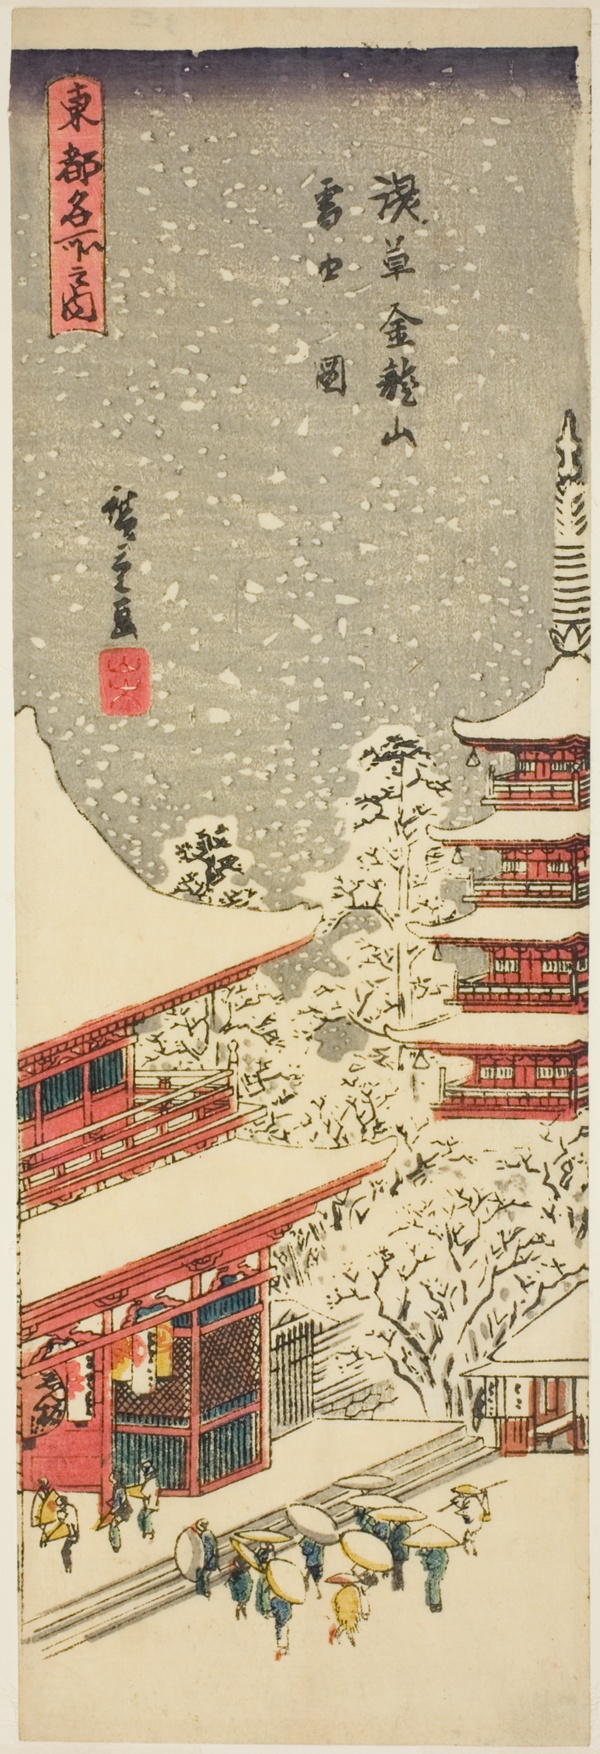 Kinryuzan Temple in Asakusa in Falling Snow (Asakusa Kinryuzan setchu no zu), from the series 